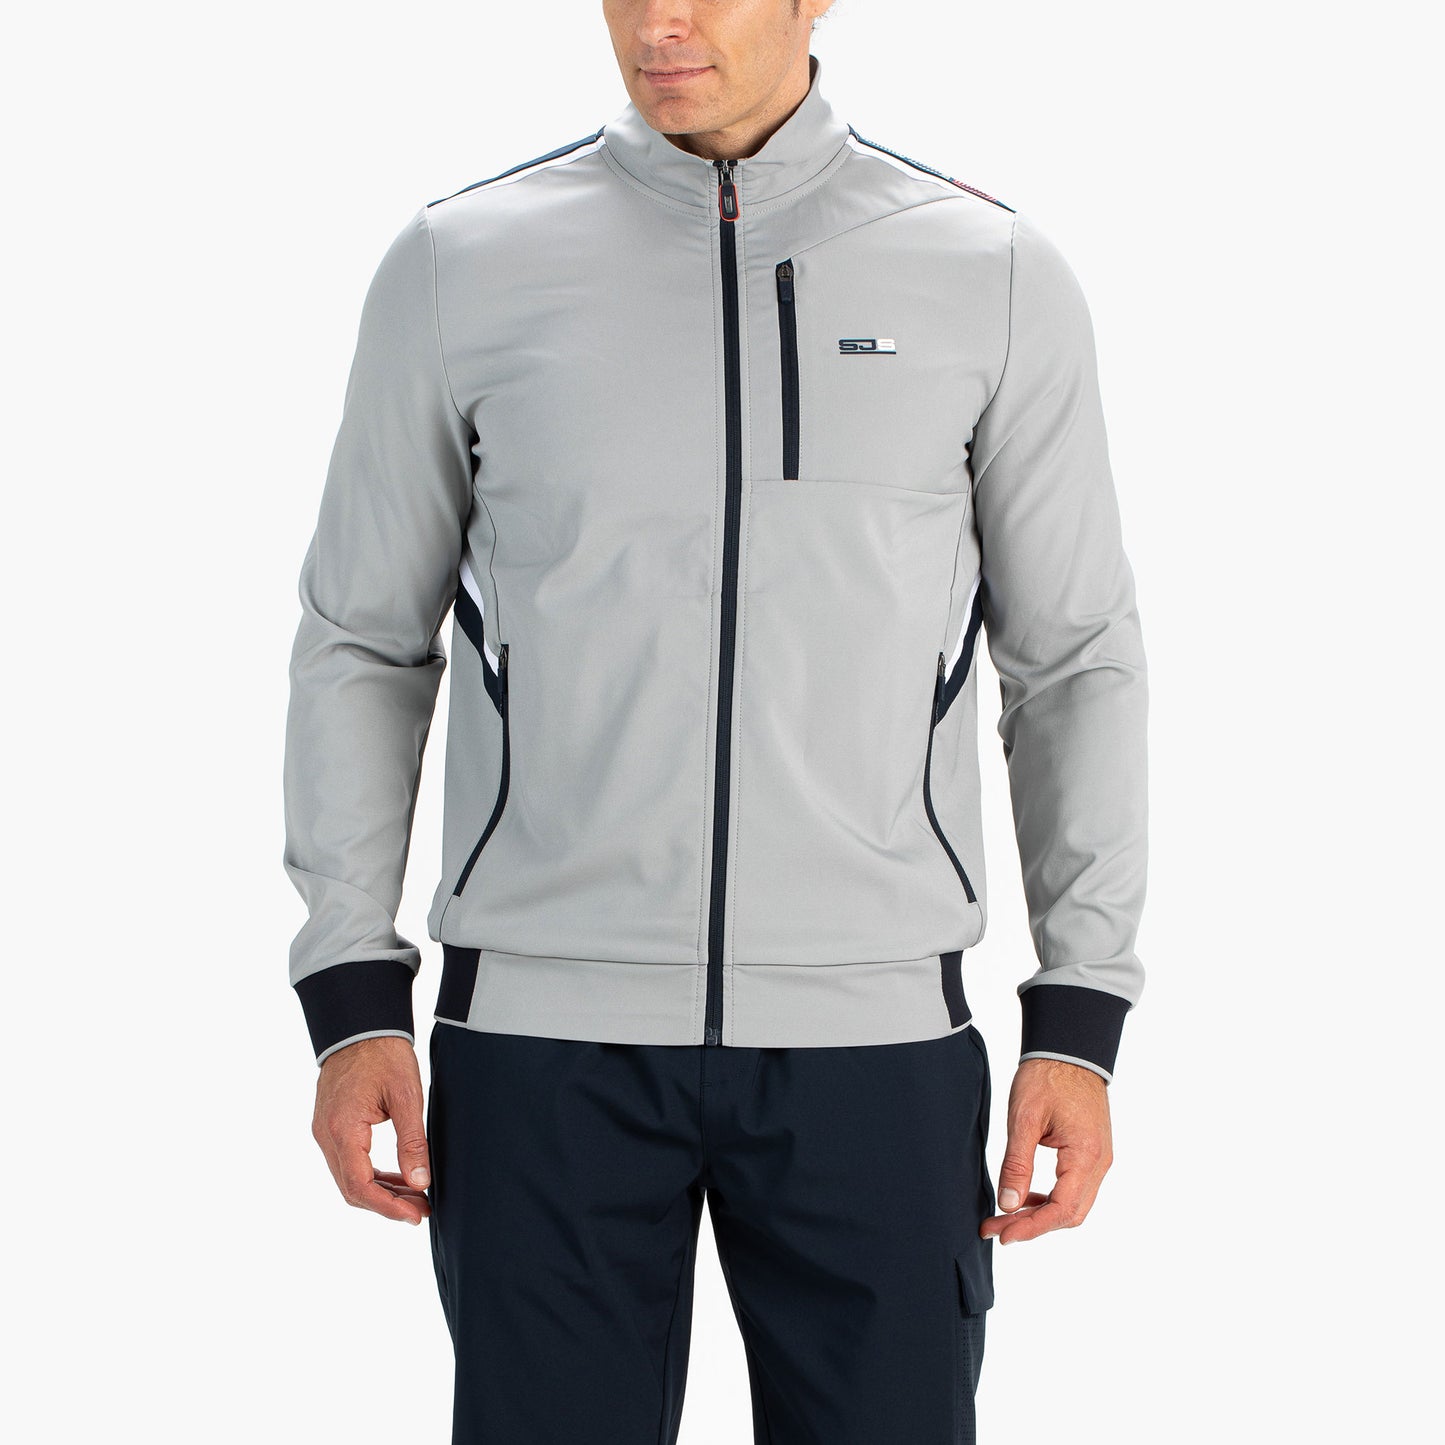 Sjeng Sports Adam Men's Tennis Jacket Grey (1)